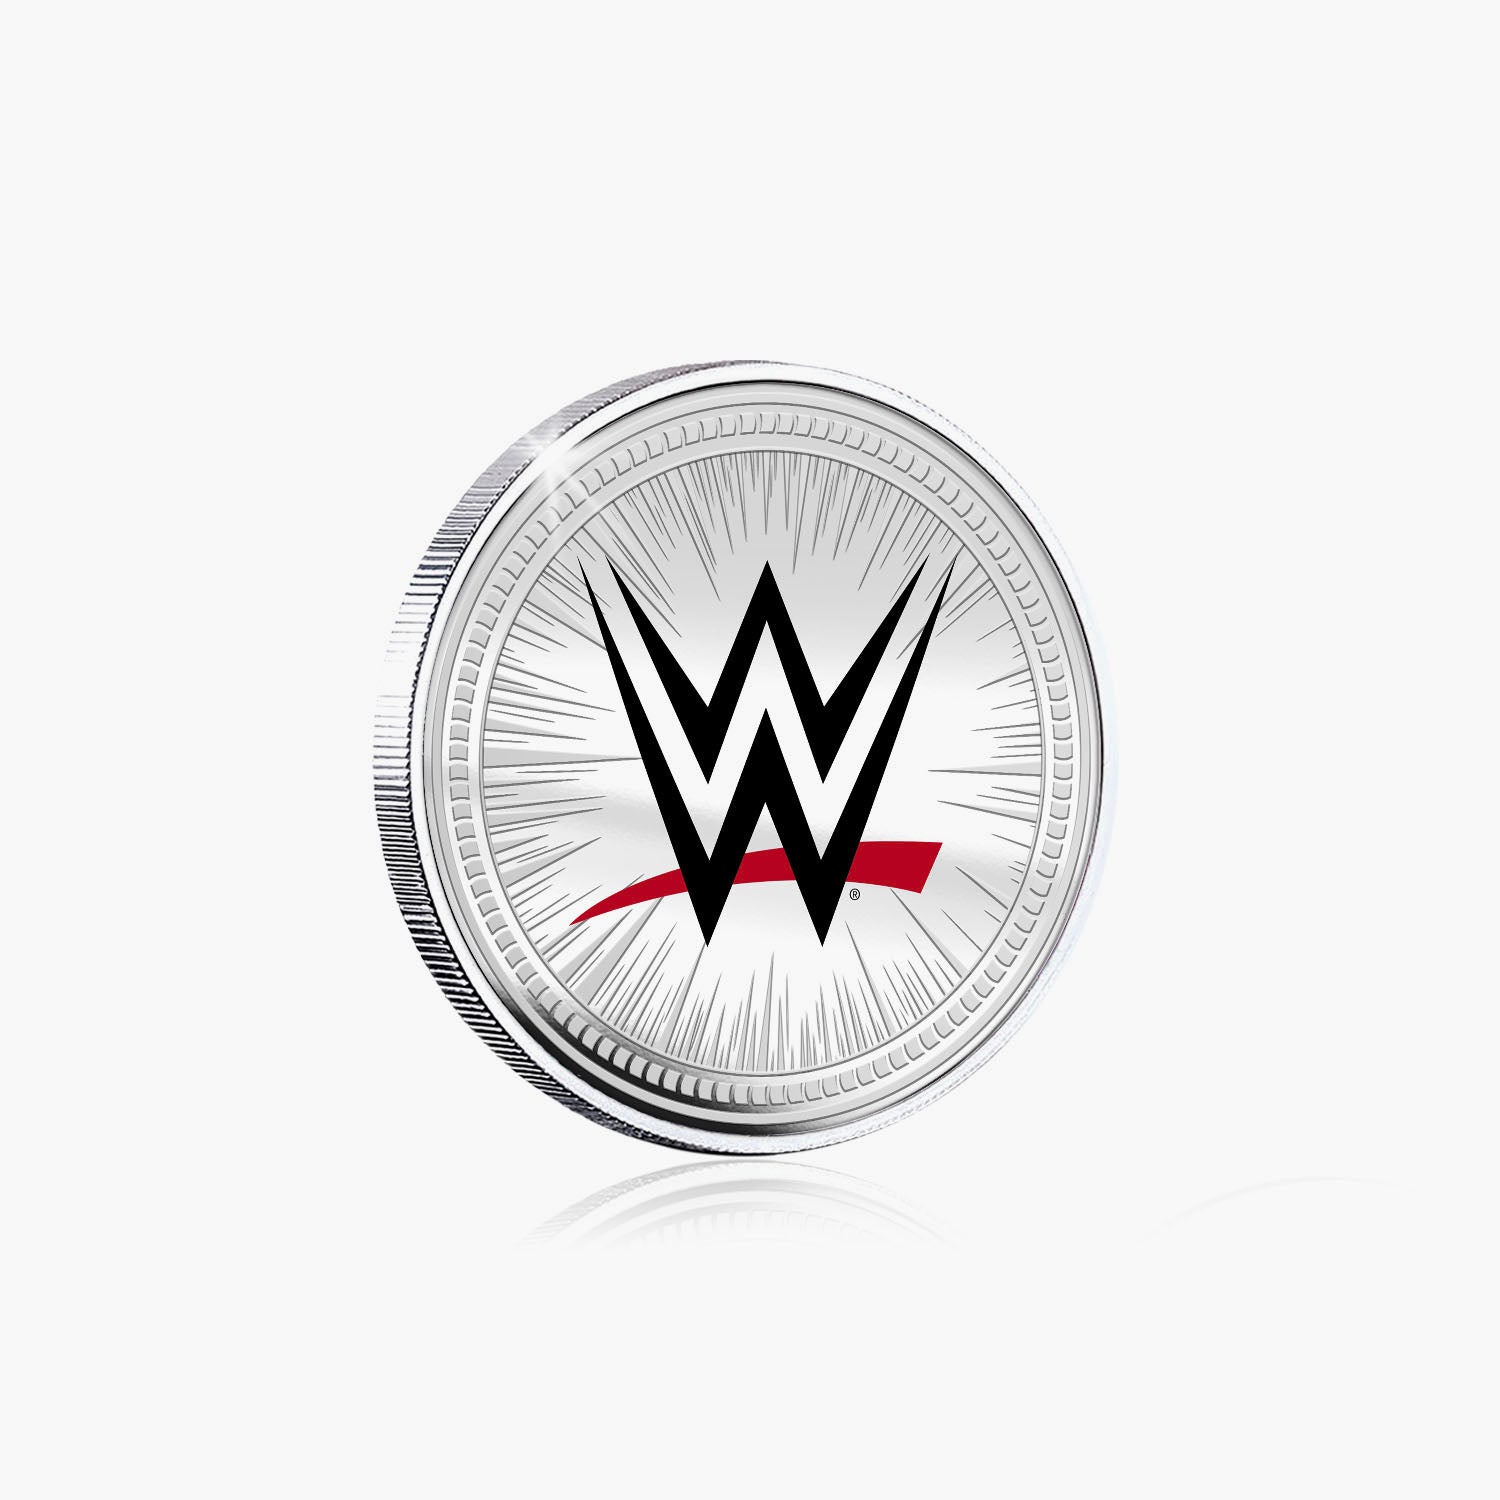 WWE Commemorative Collection - Batista - 32mm Silver Plated Commemorative